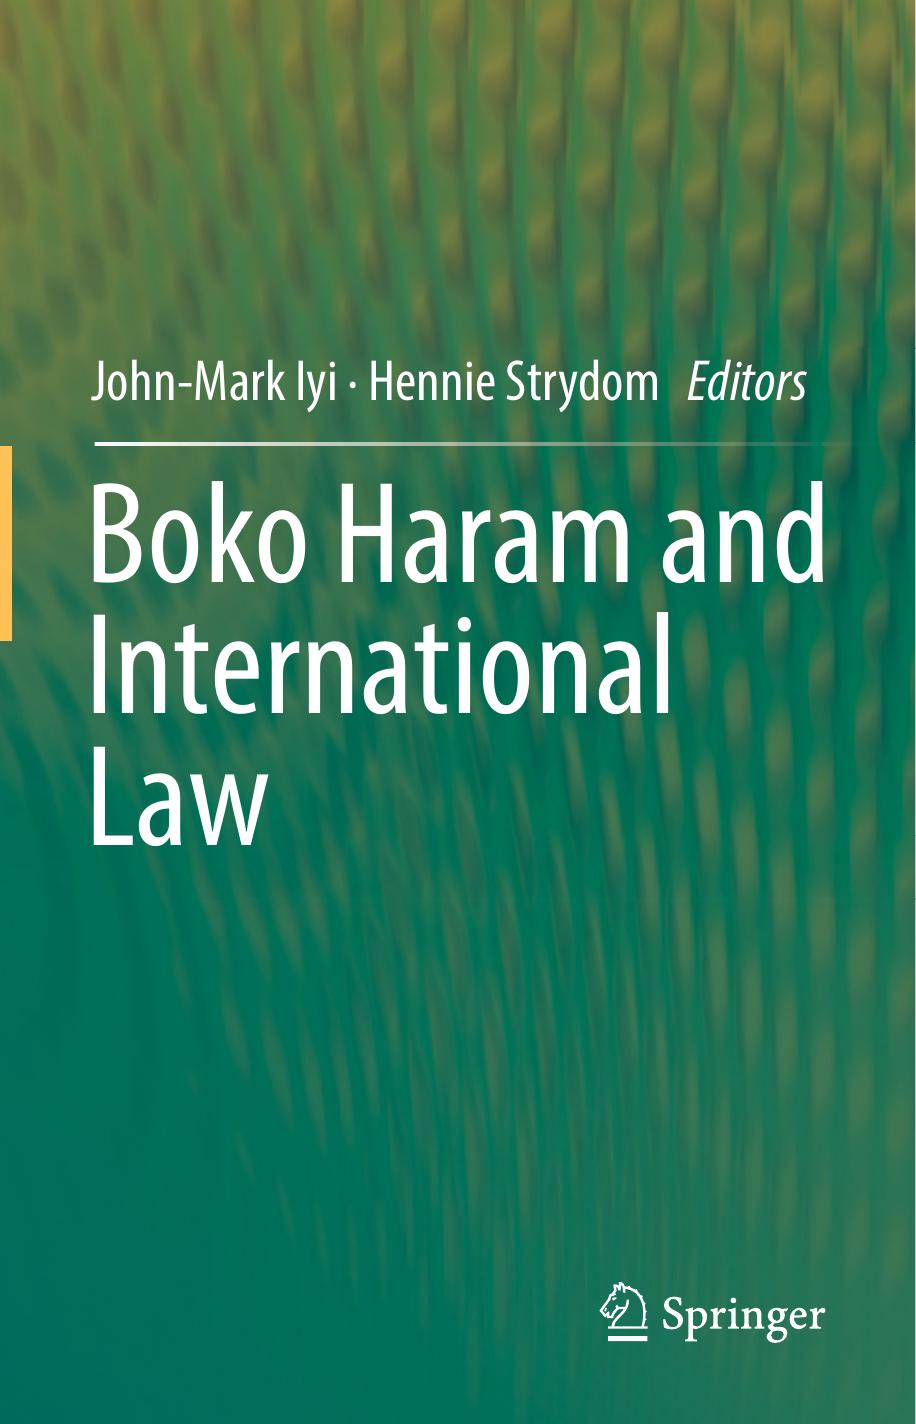 Boko Haram and International Law 2018